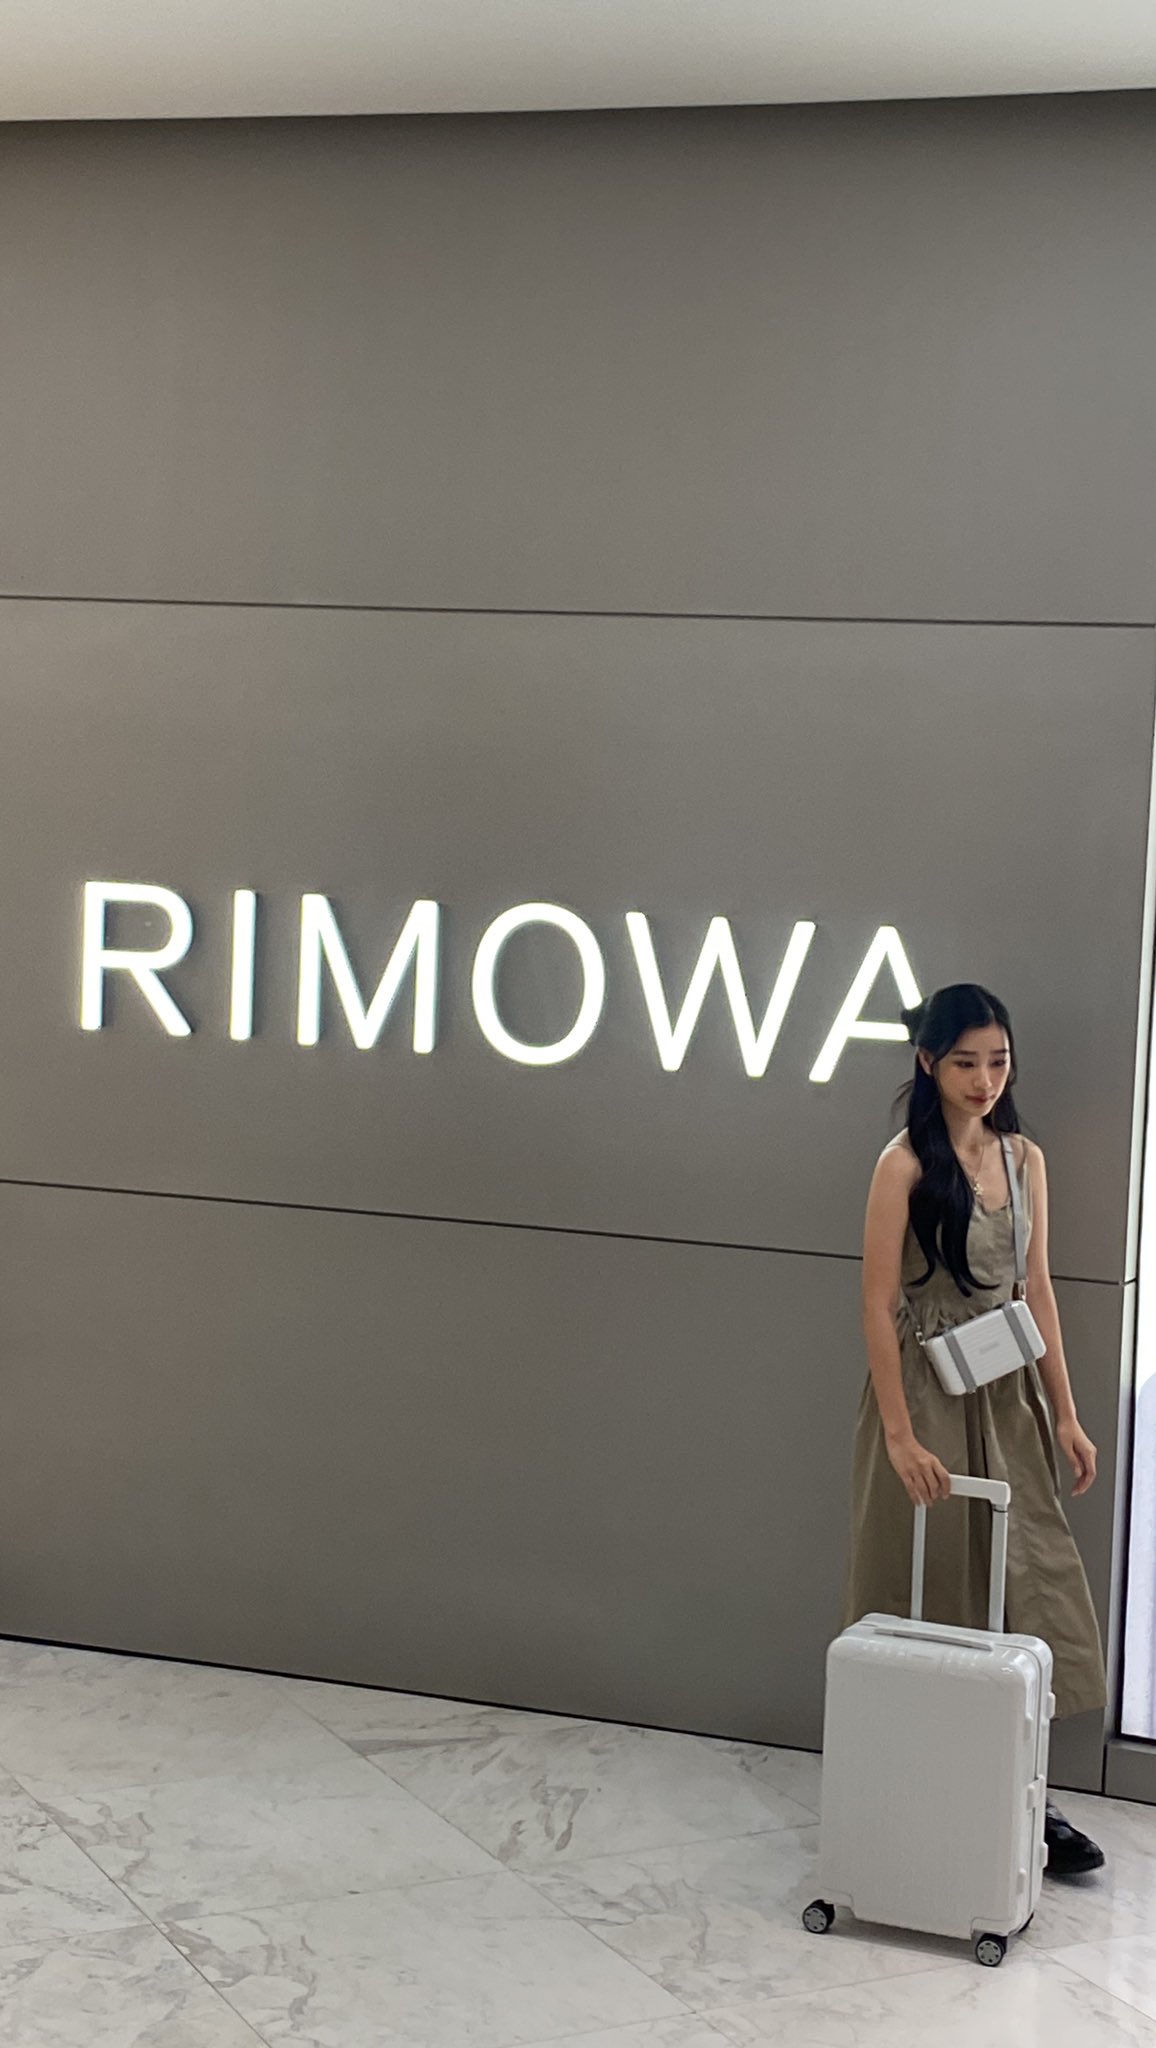 RIMOWA opens its newest boutique in Emporium